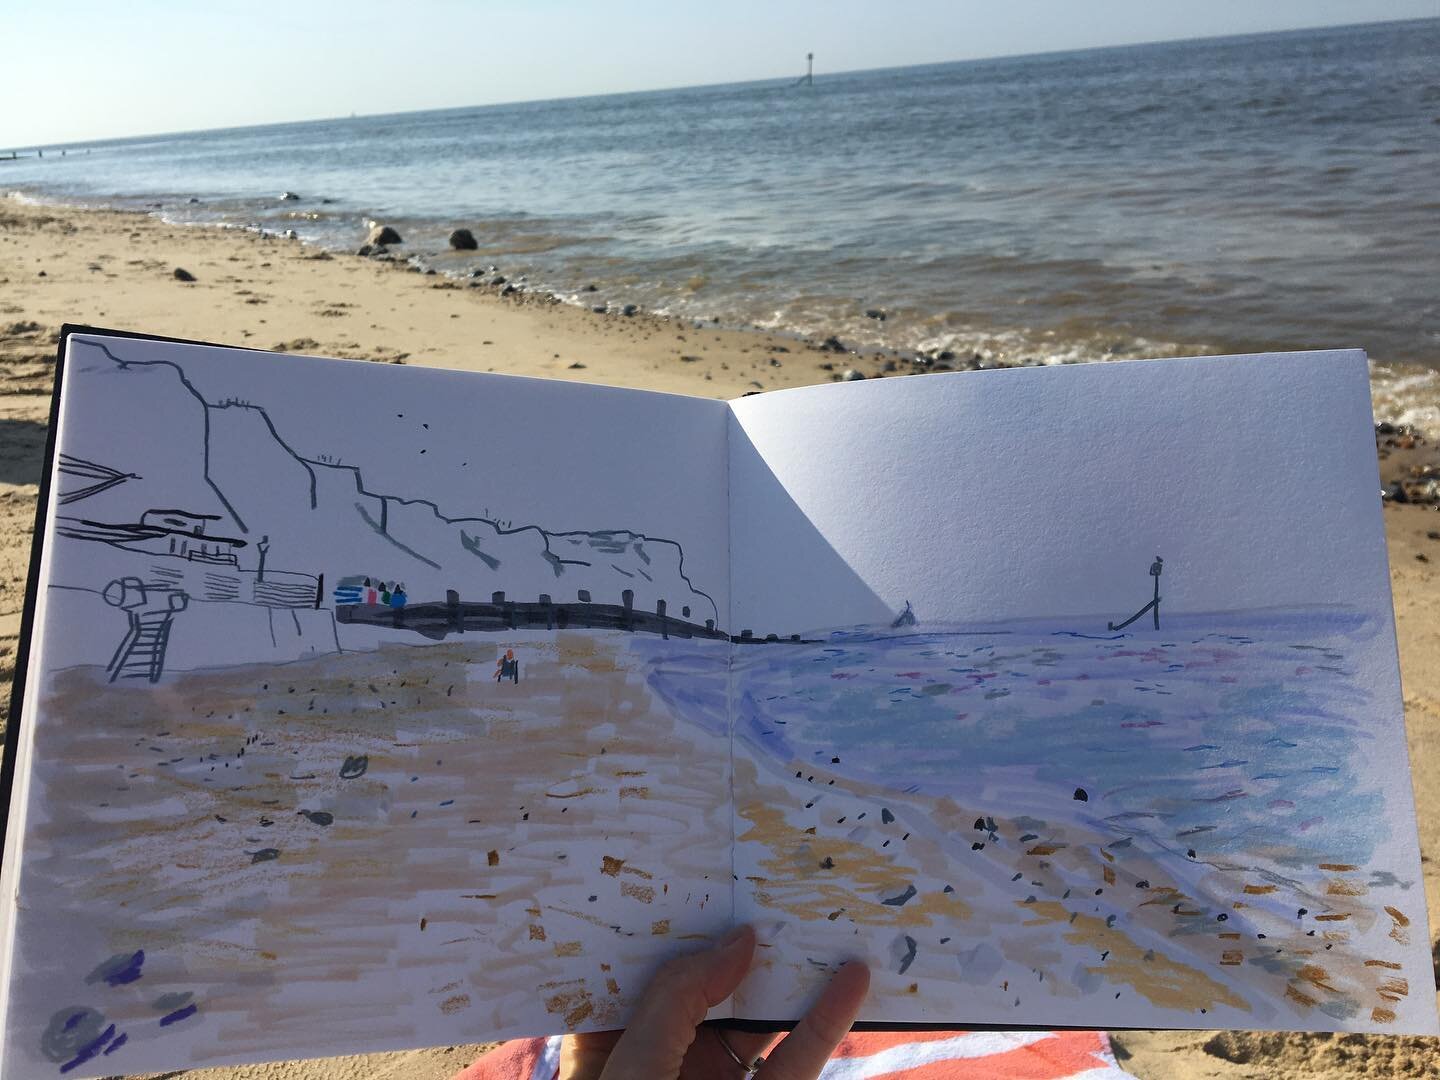 Draw draw draw 🍦🐚✏️ Seaside sketch, Norfolk. 10 minutes mixed media #walktosee #drawingoftheday #drawdrawdraw #norfolk #seaside #illustrator #illustration #illustrationartists #illustratorsoninstagram